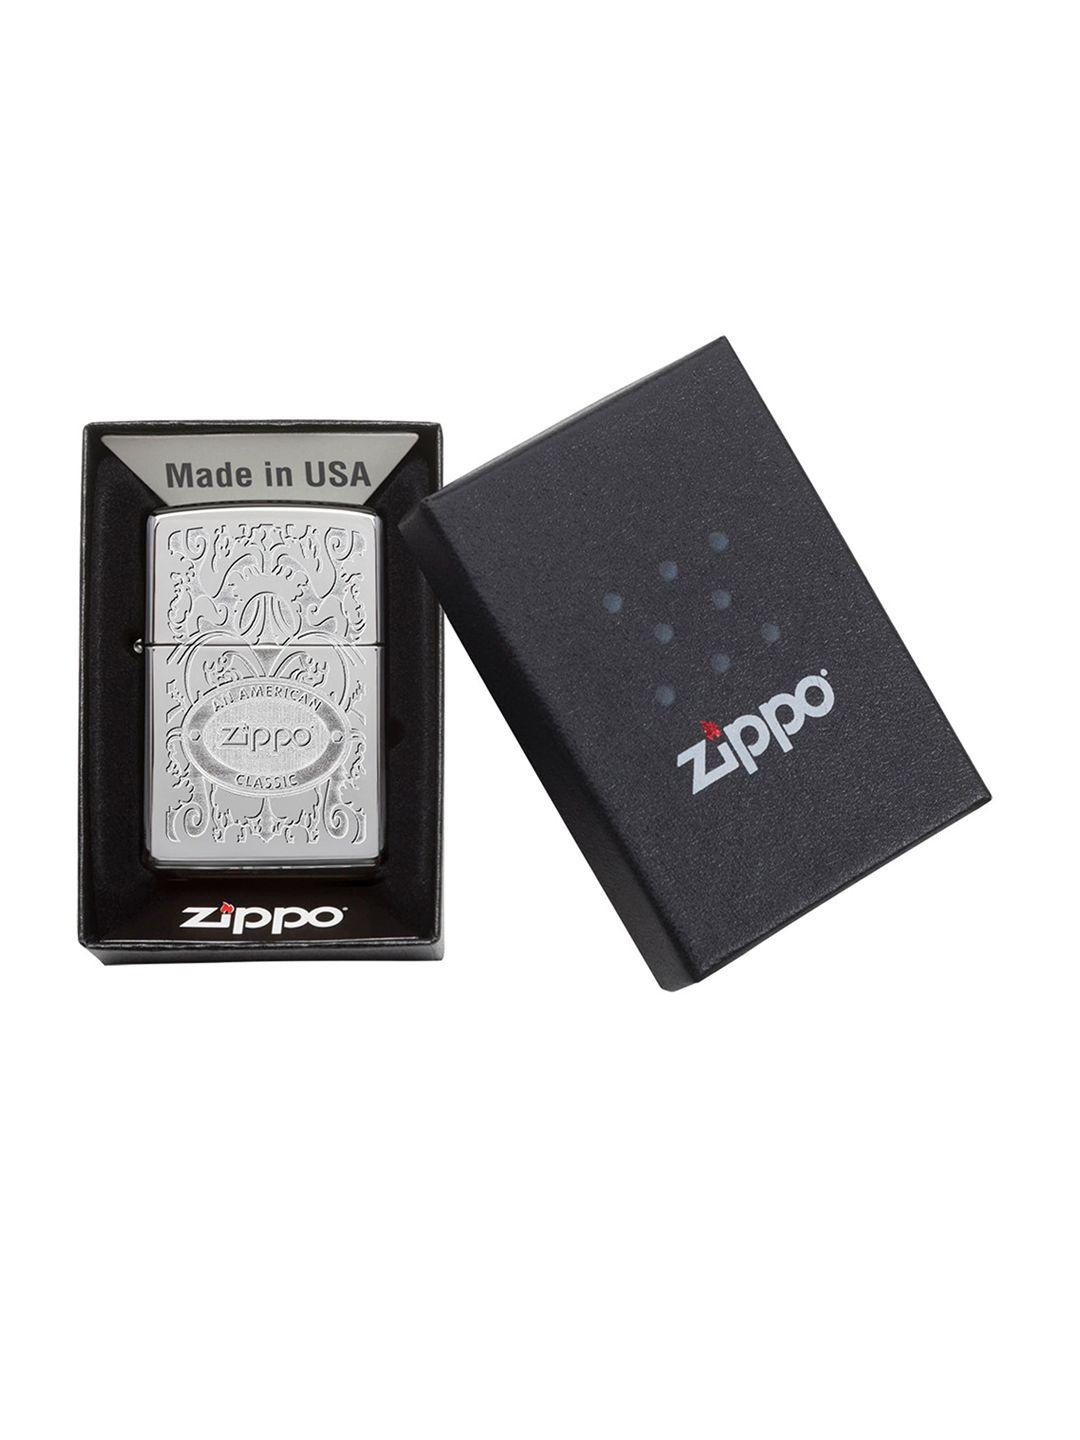 zippo silver-toned crown stamp high polish chrome pocket lighter